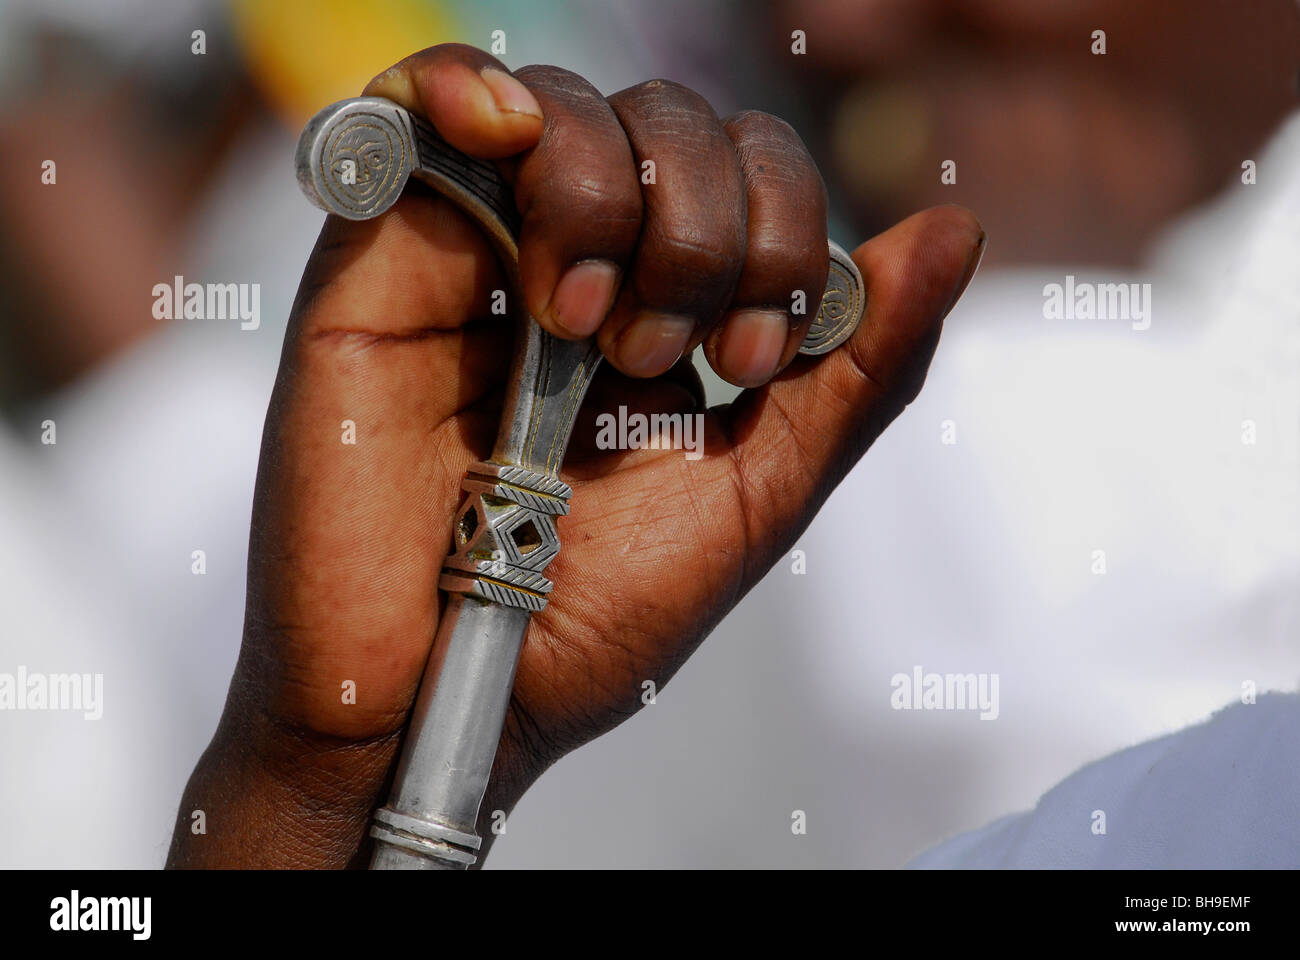 Hand of Ethiopian worshiper gripping prayer staff Stock Photo